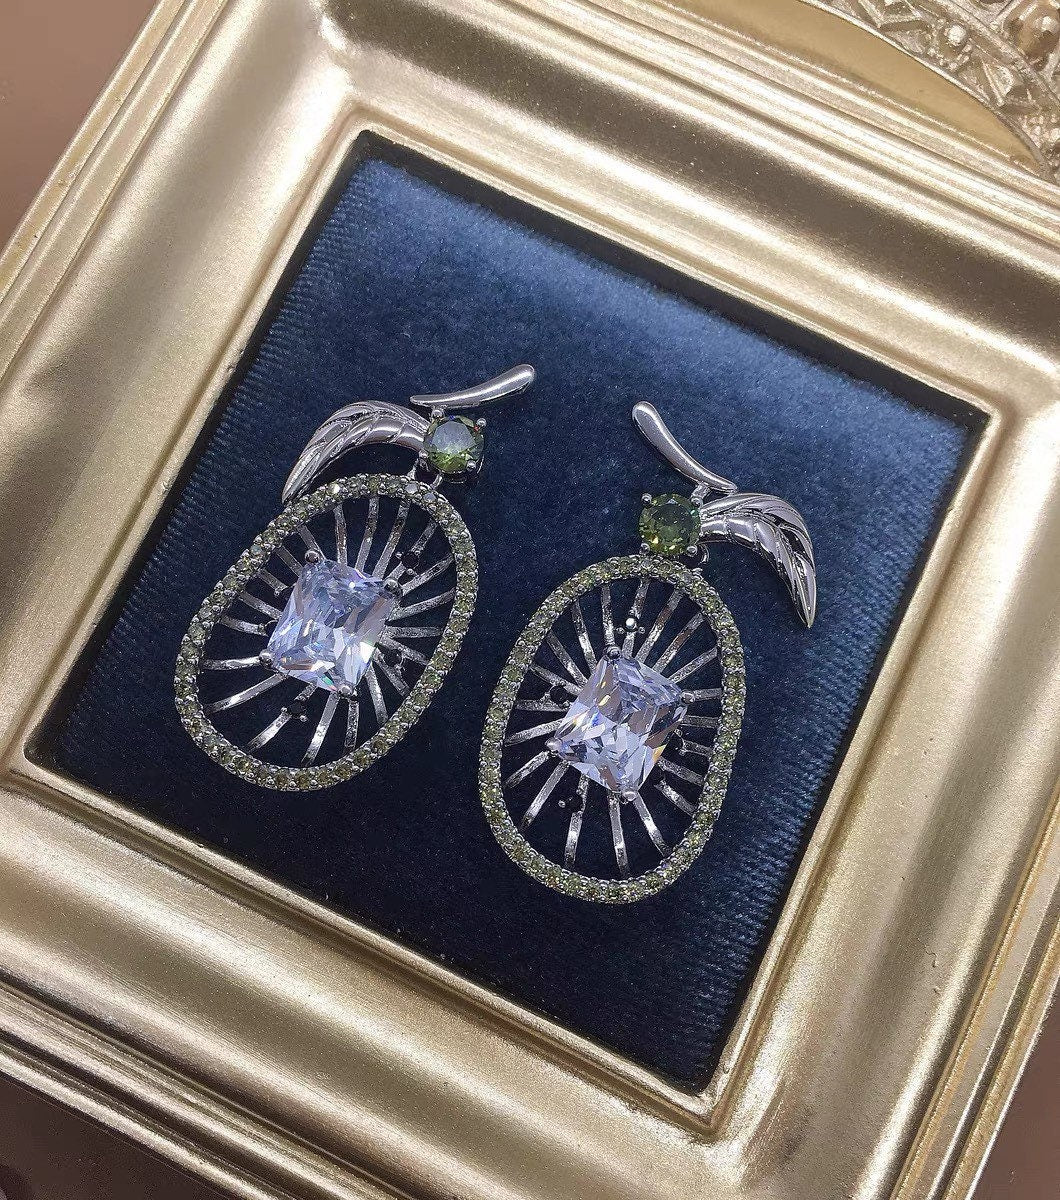 Diamond kiwi earrings